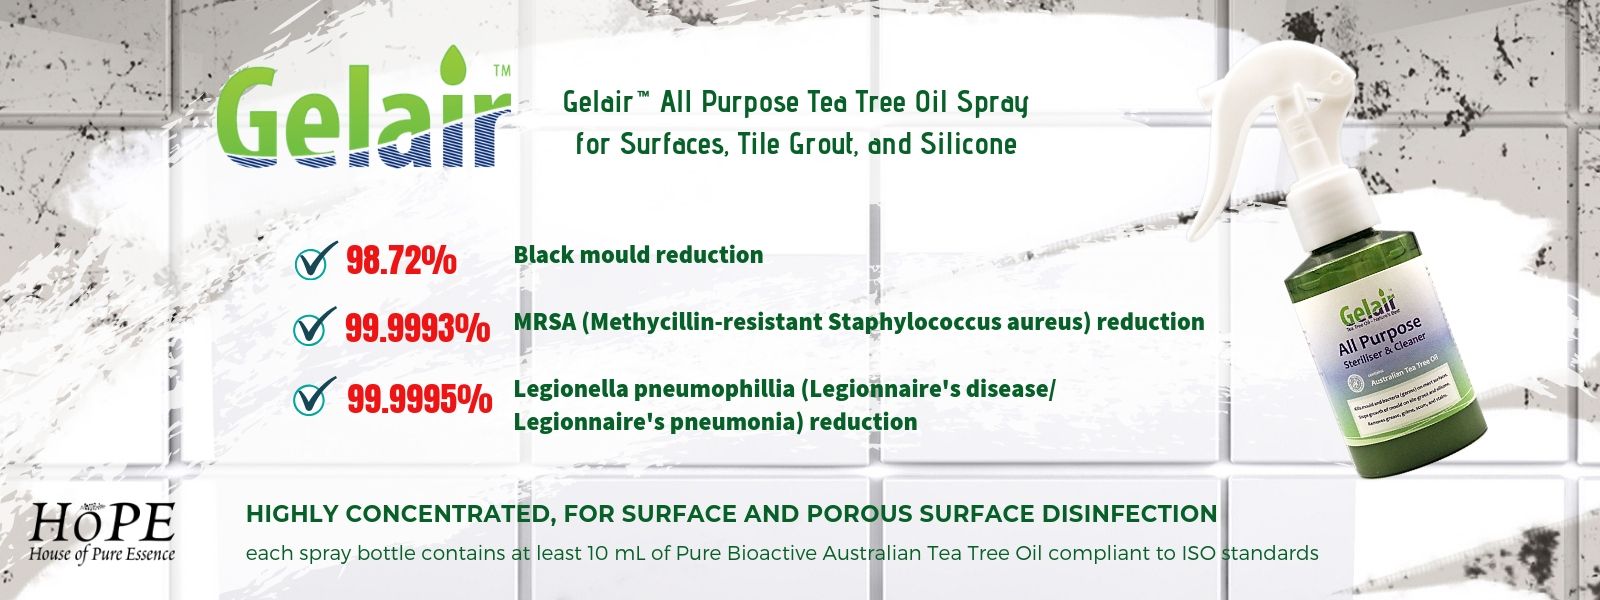 Gelair All Purpose Tea Tree Oil Spray